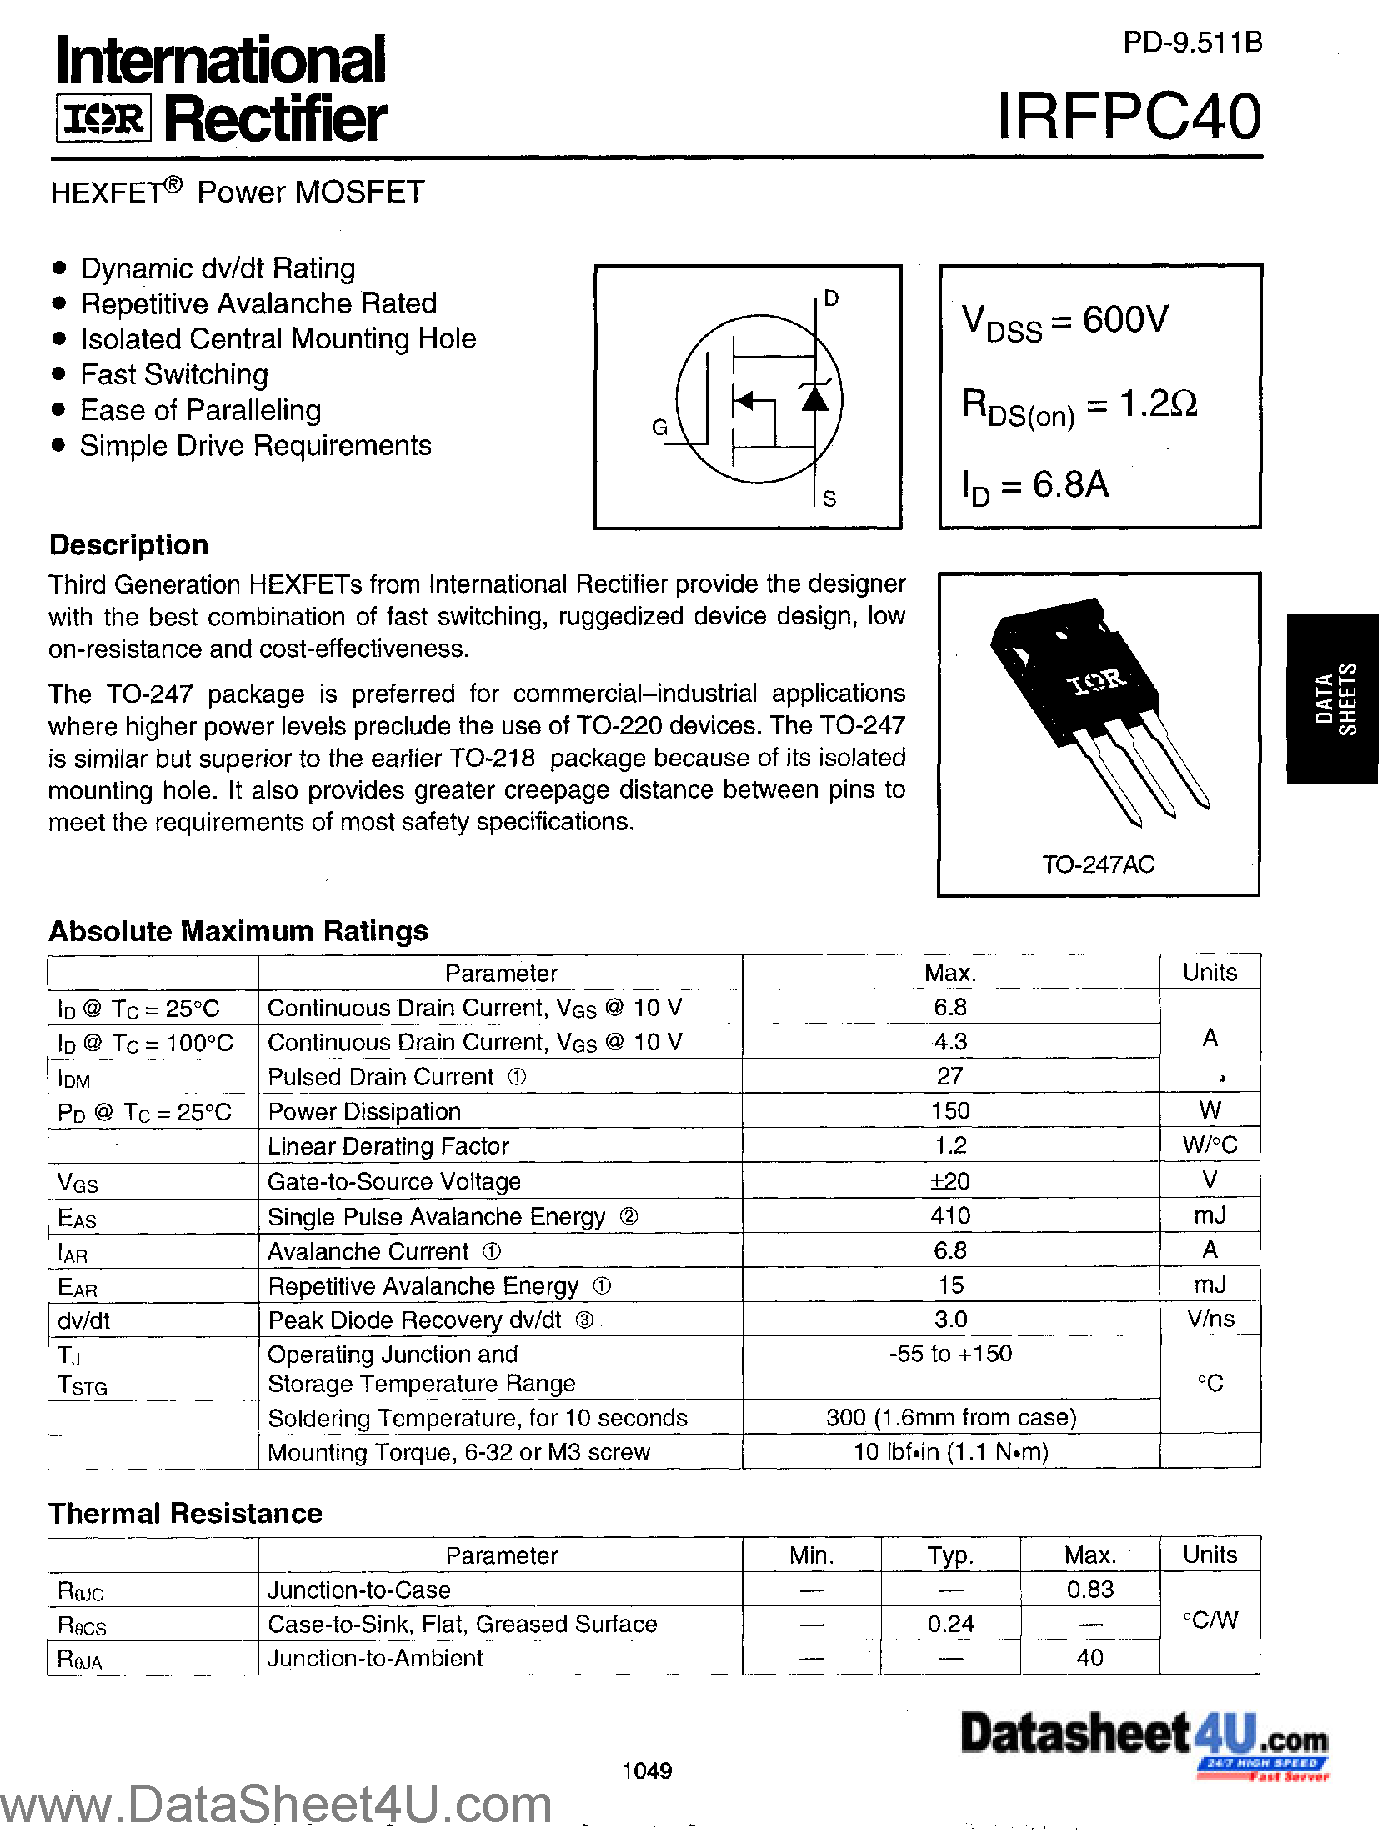 Даташит IRFPC40 - Power MOSFET страница 1